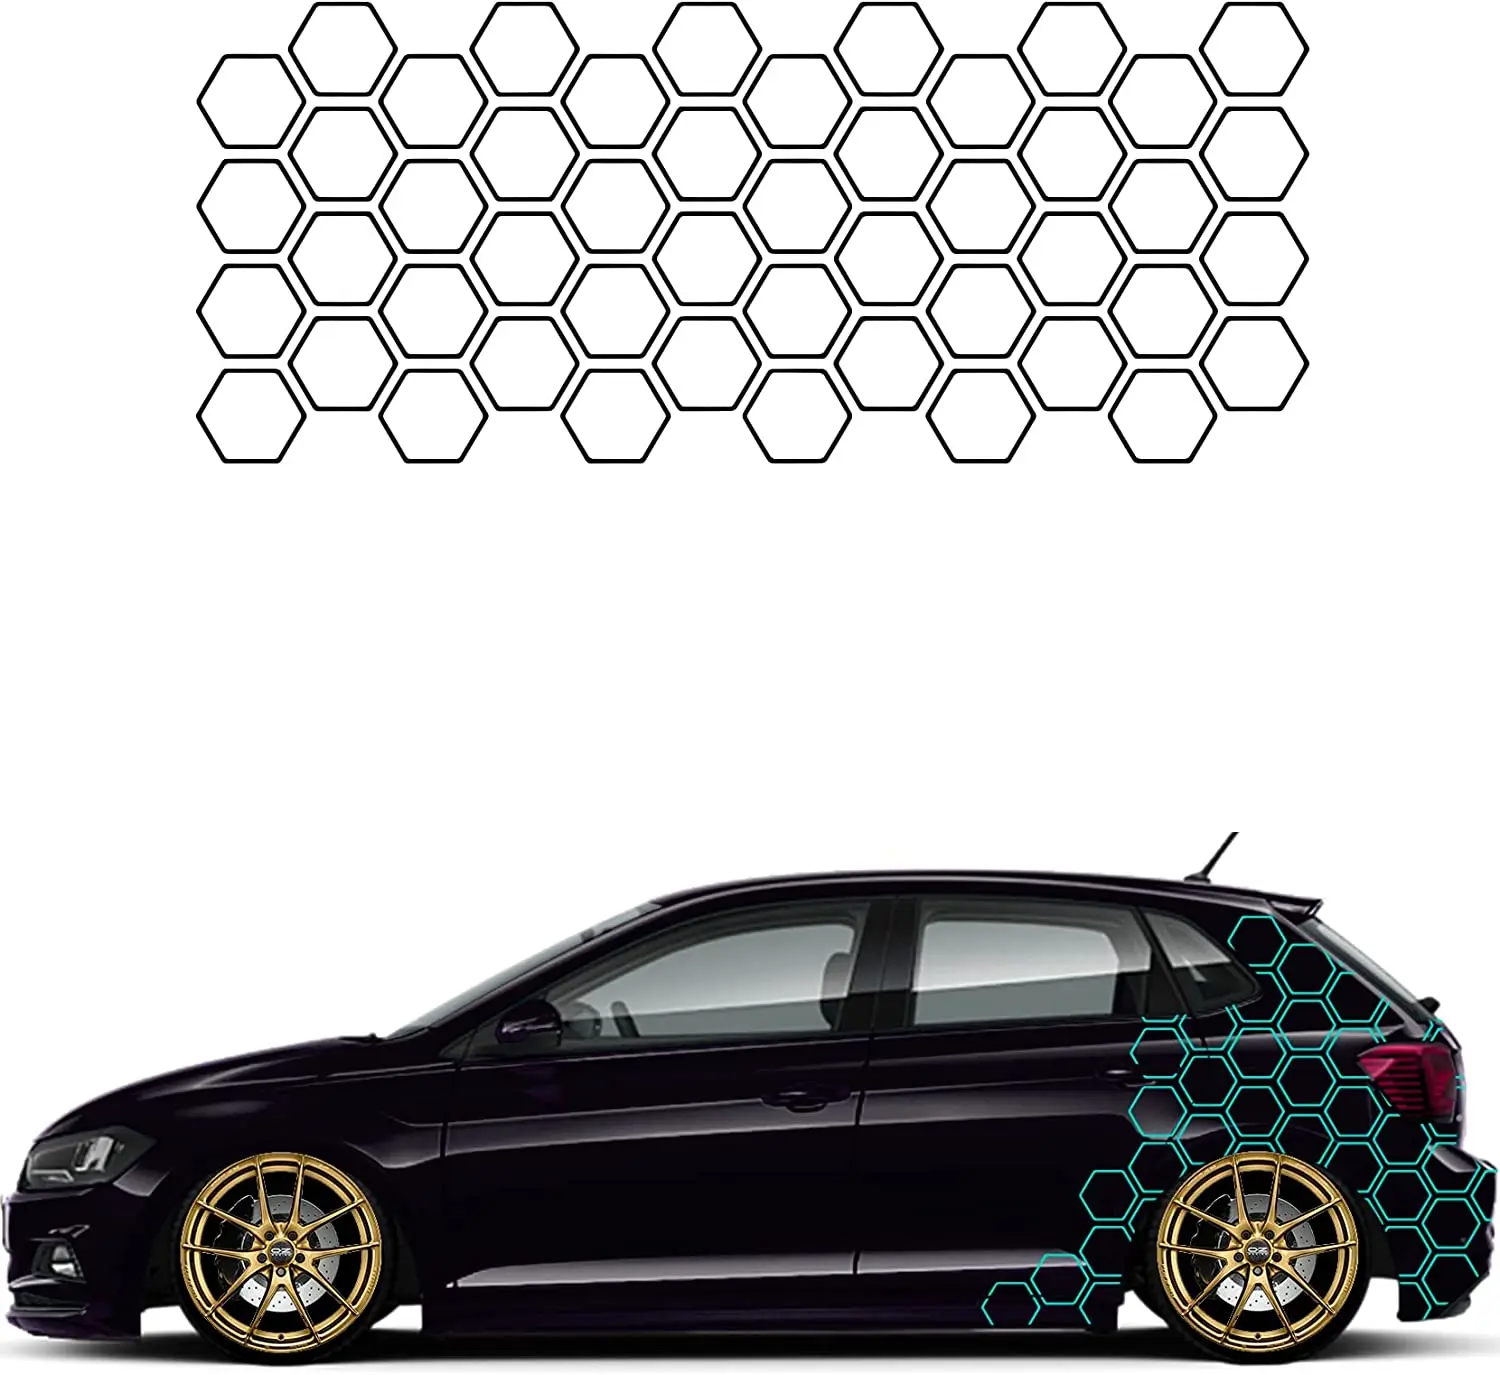 

1A Style Sticker Car Honeycomb Open Sticker Car Decor Tuning Car Side Sticker Hexagon Caravan Premium Film (Turquoise)